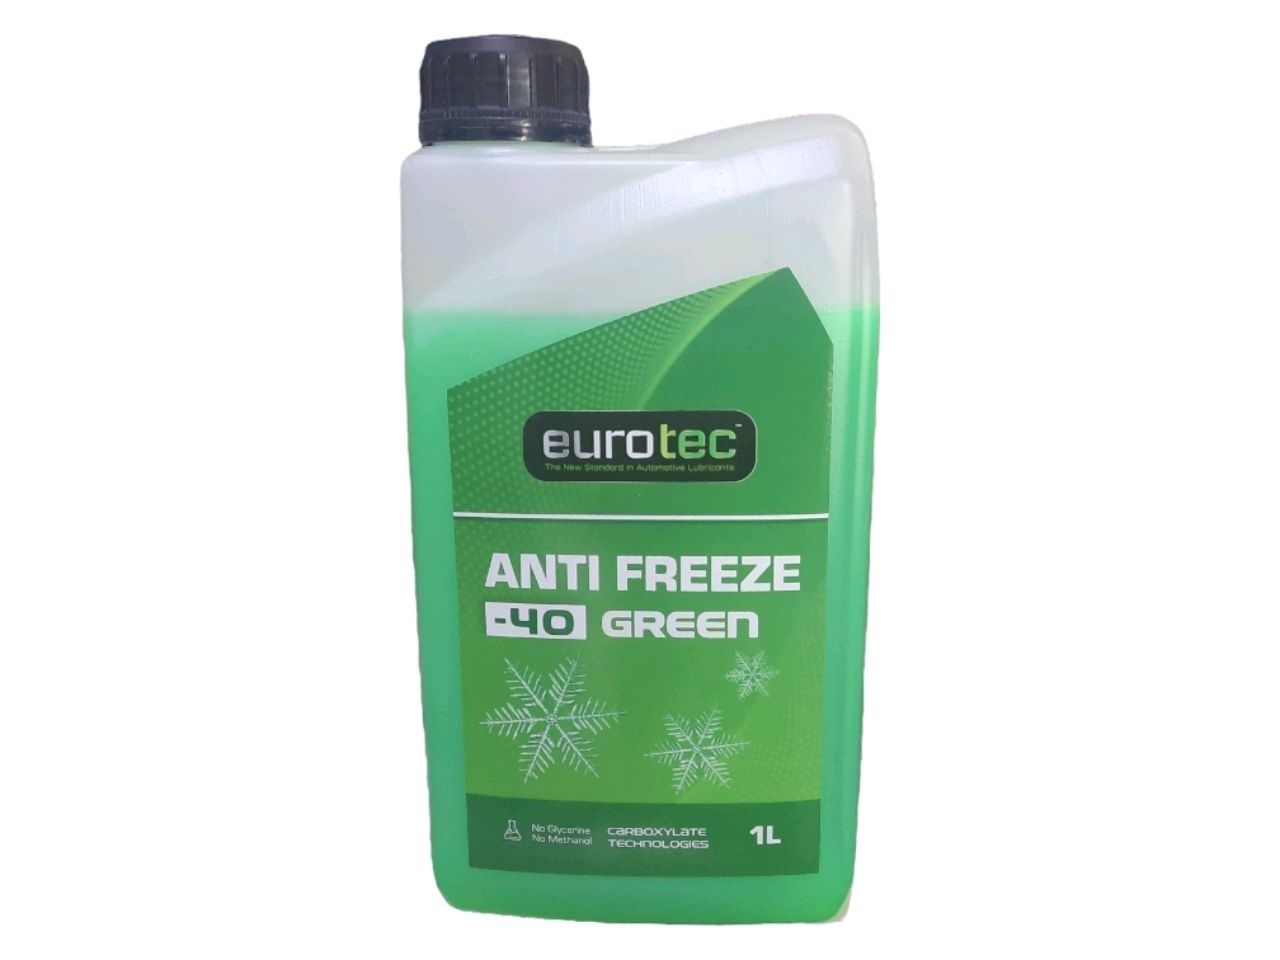 EUROTEC Antifreeze -40 Green 1L.